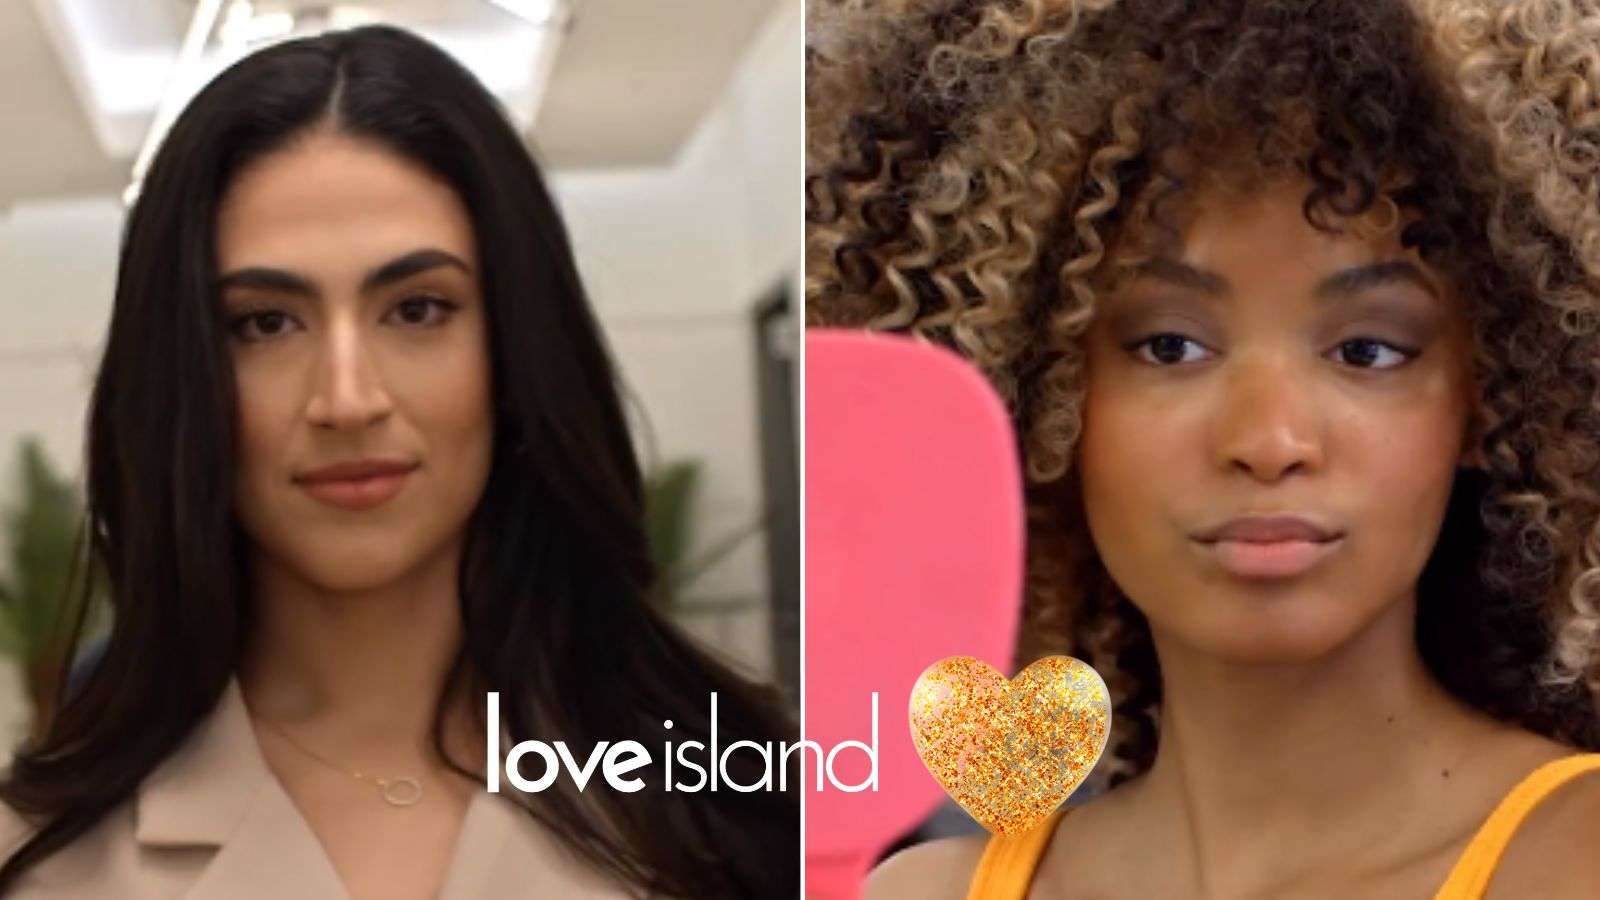 Love Island USA Season 5